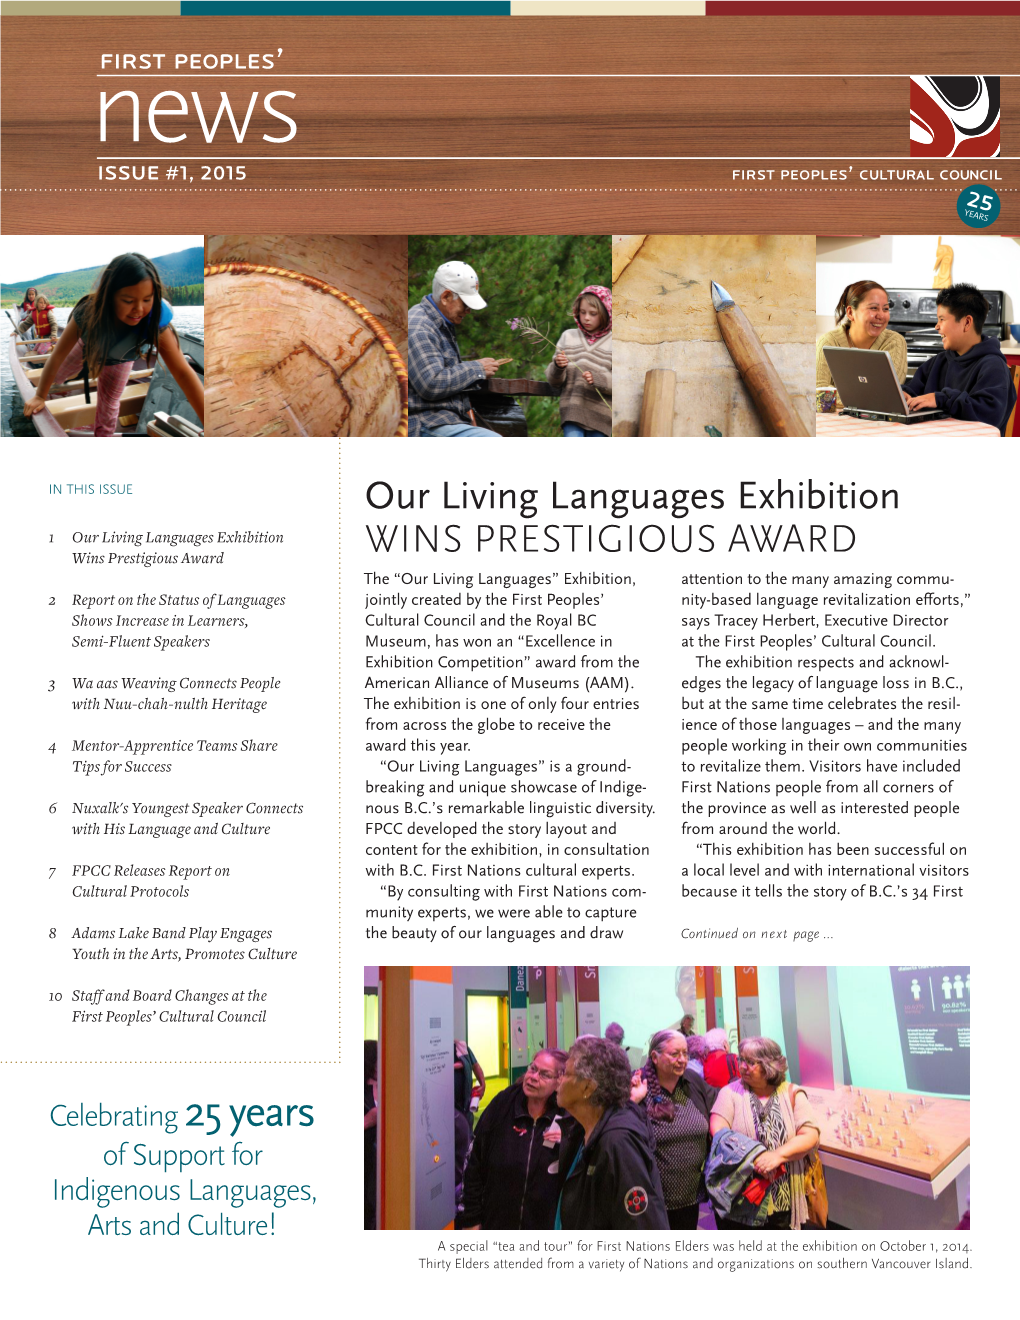 Our Living Languages Exhibition WINS PRESTIGIOUS AWARD